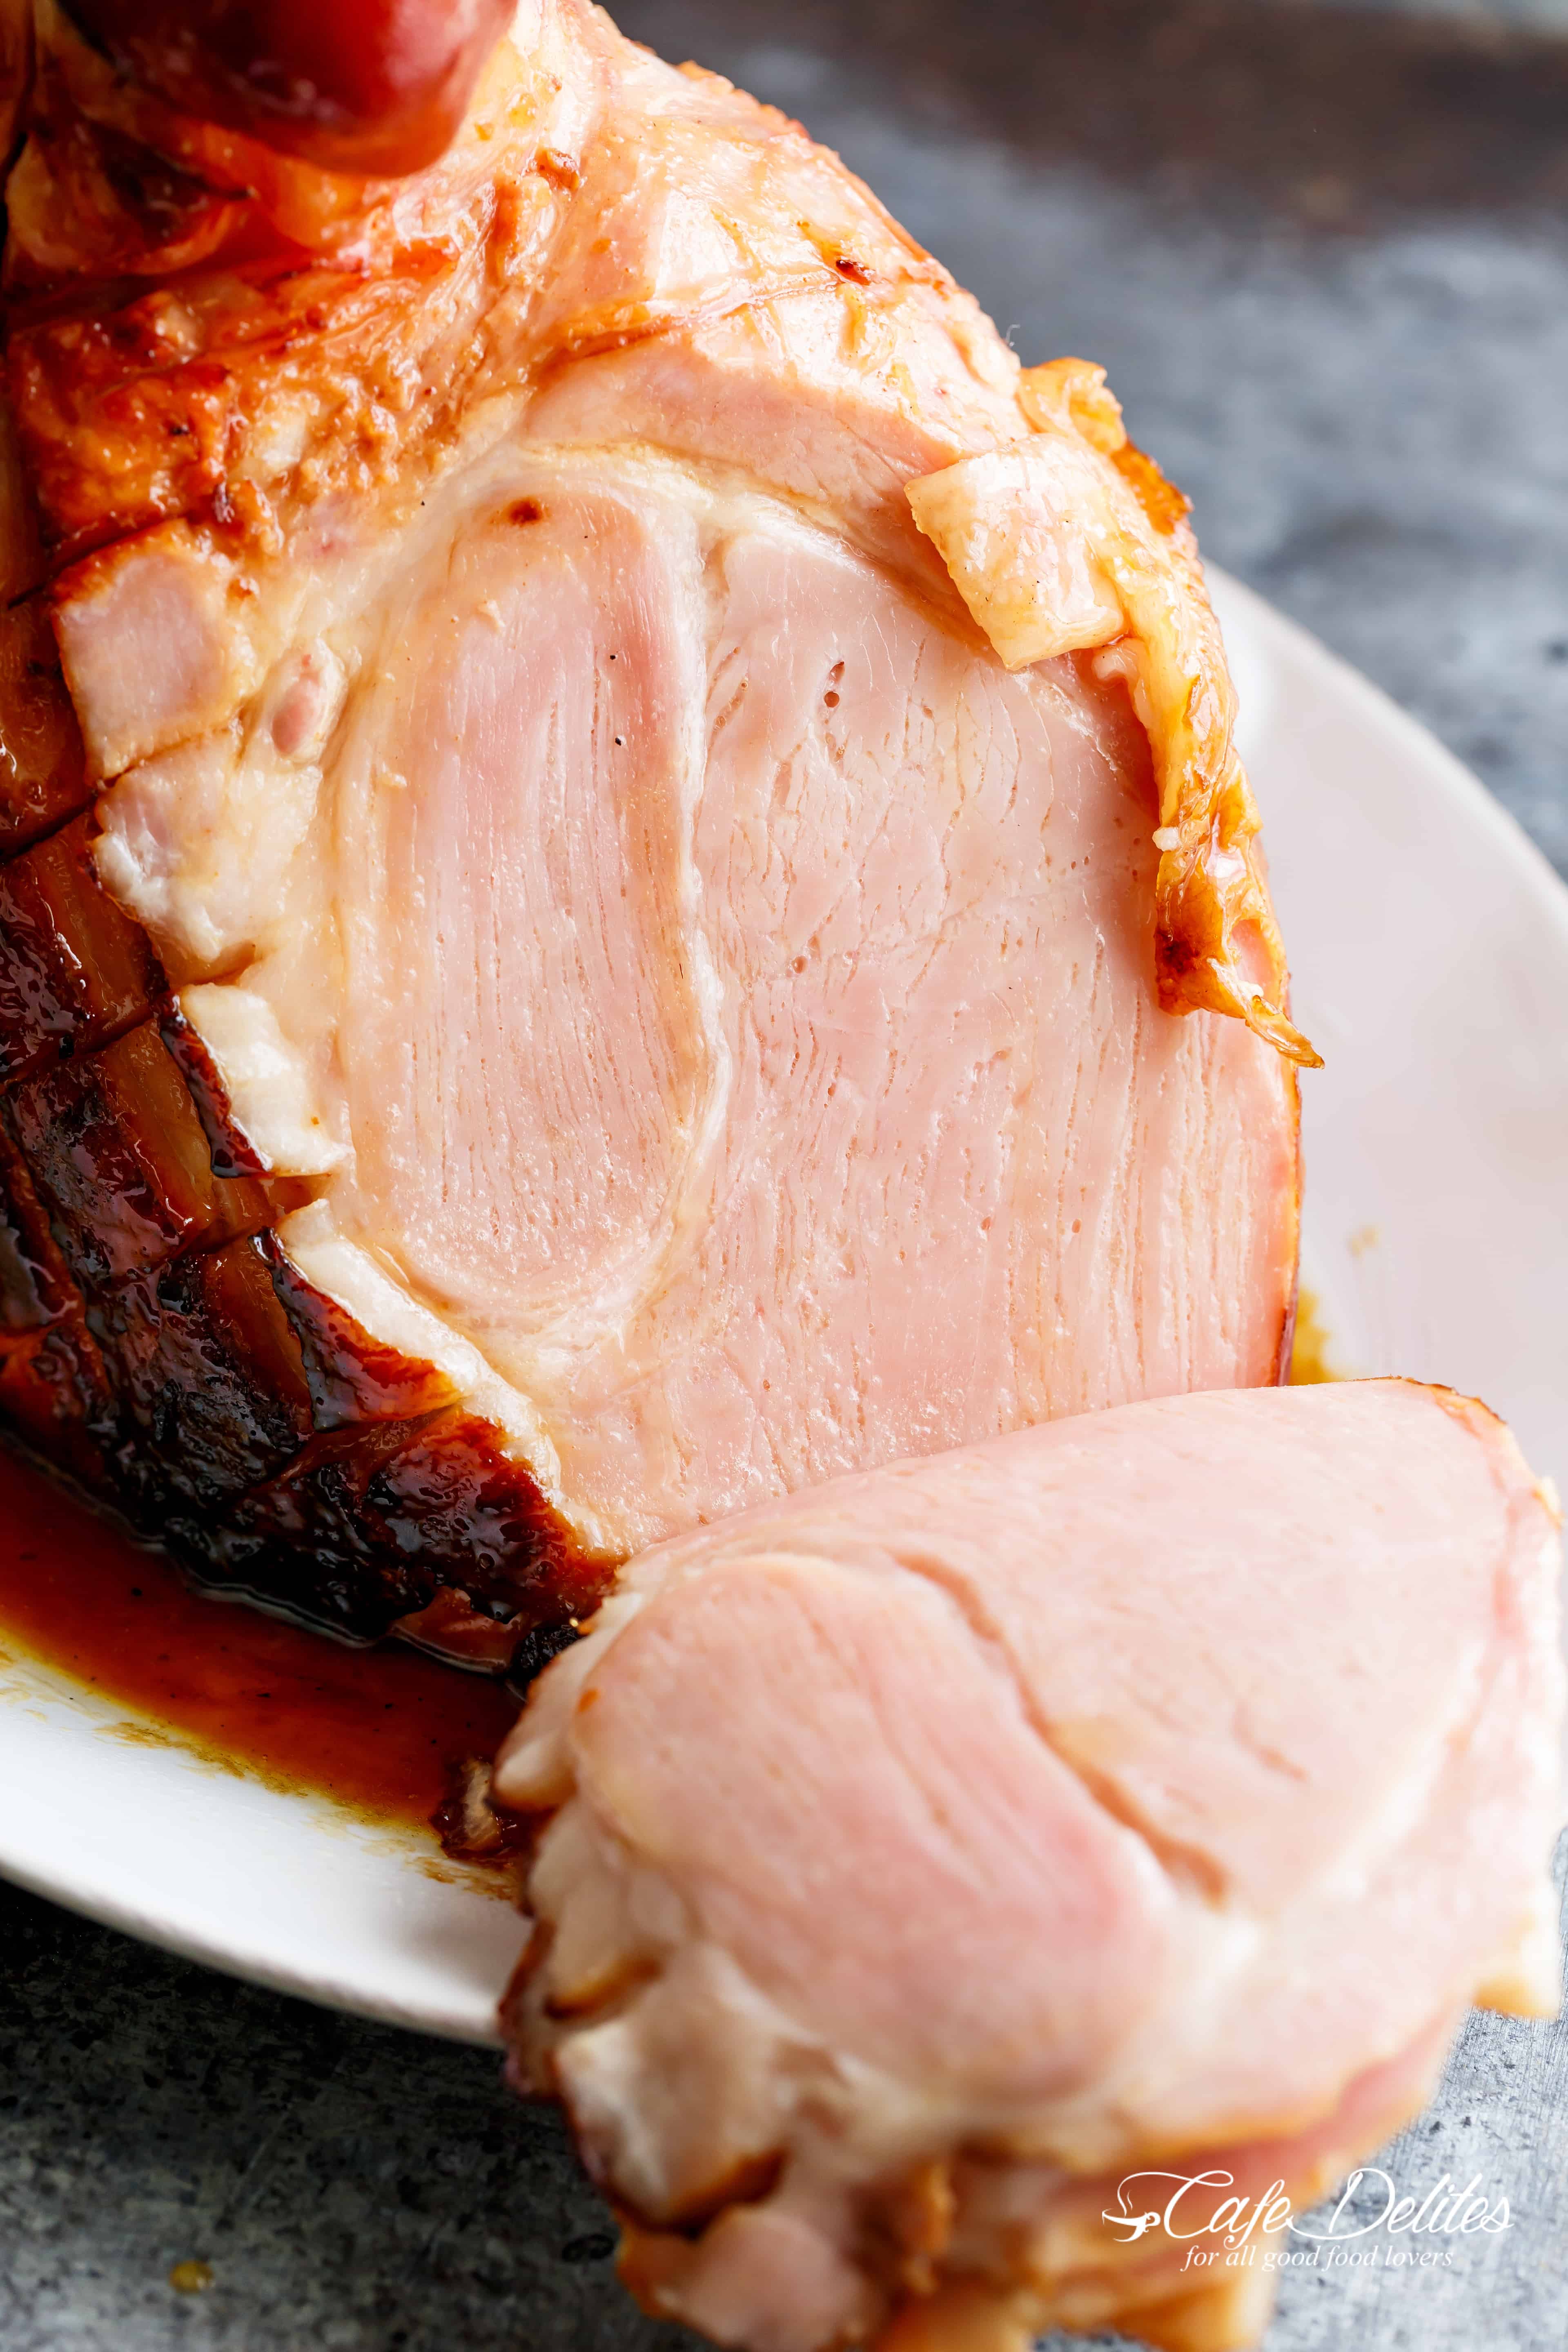 The best part is slicing through Brown Sugar Mustard Glazed Ham like butter | cafedelites.com